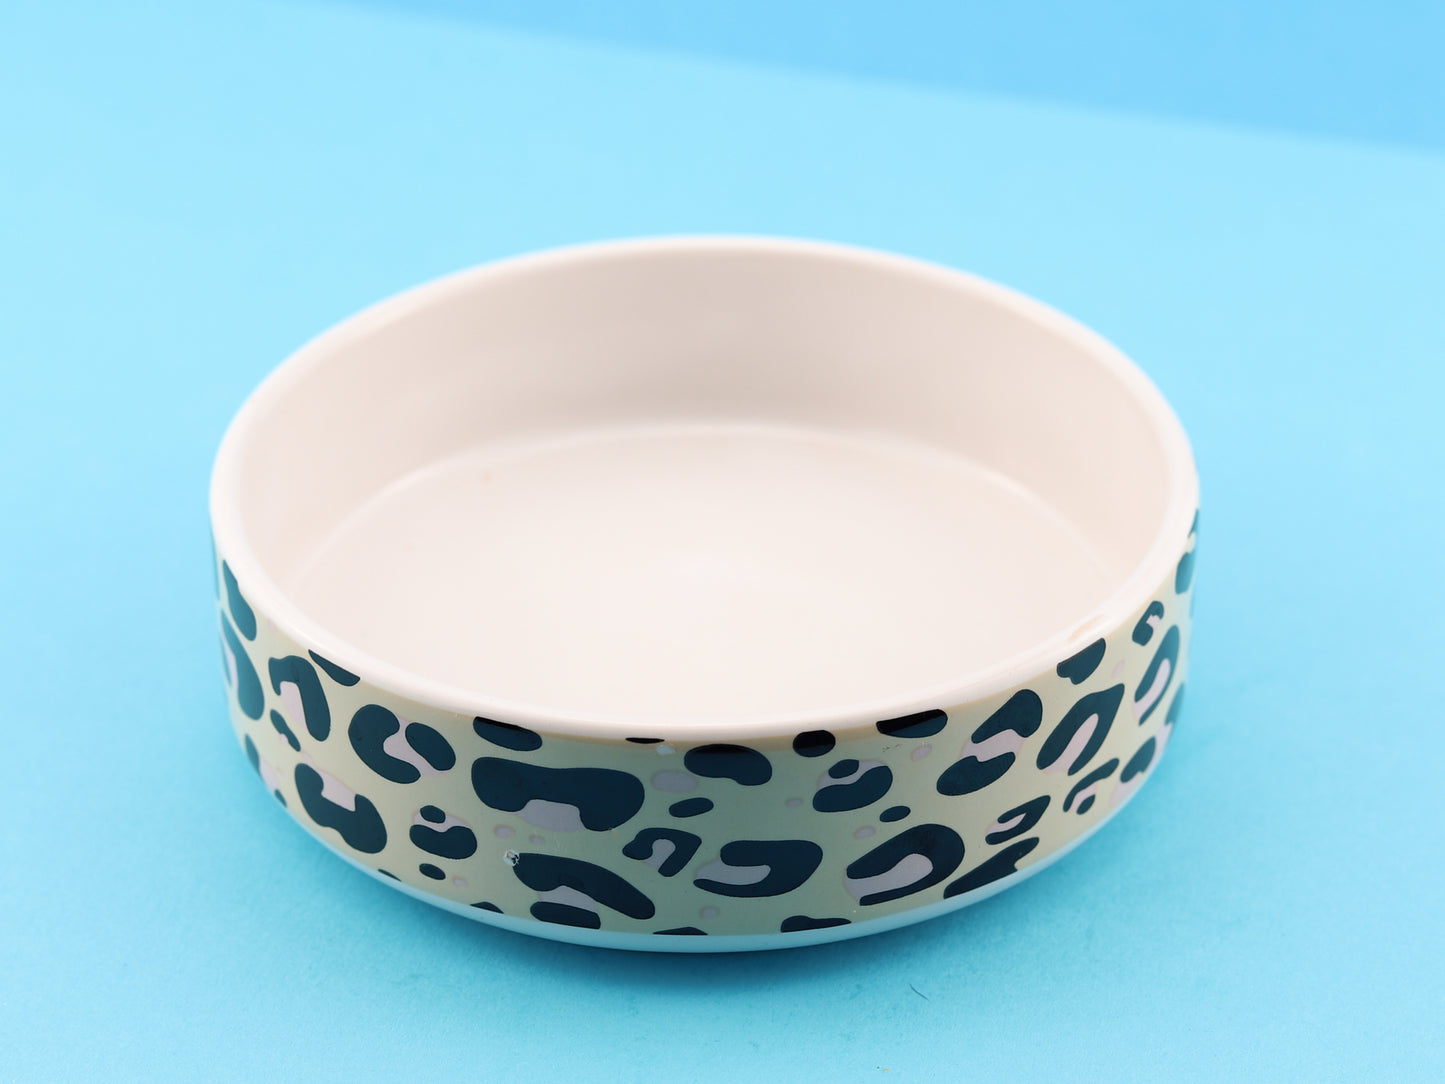 Ceramic leopard print bowl. 23cm in diameter. 